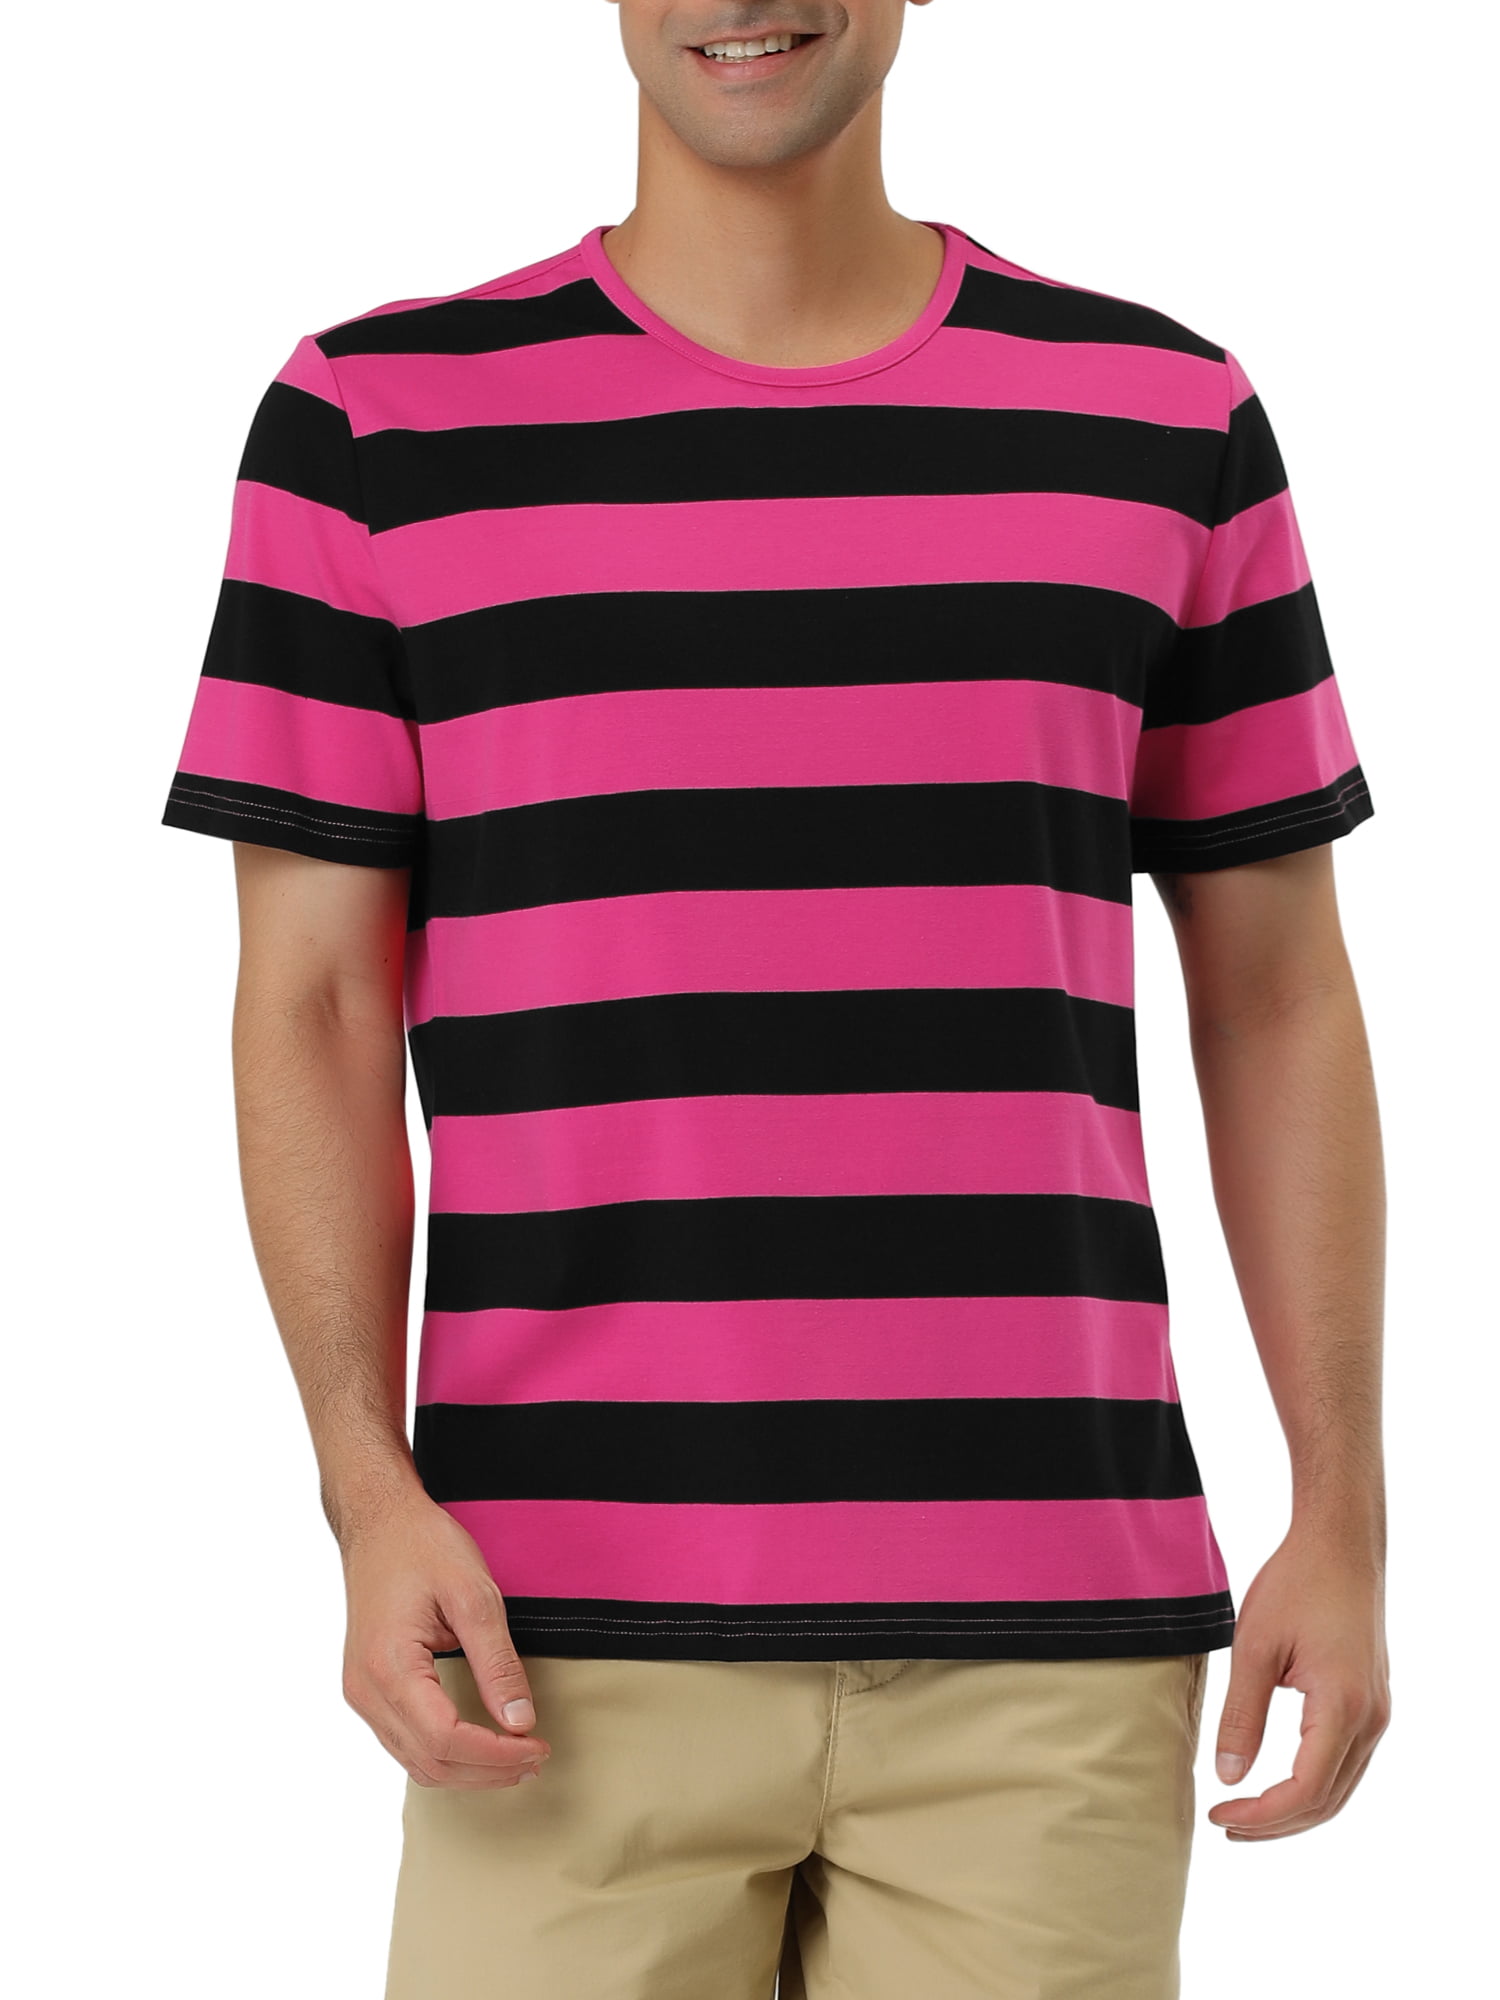 Neon Pink Striped Short Sleeve Tee